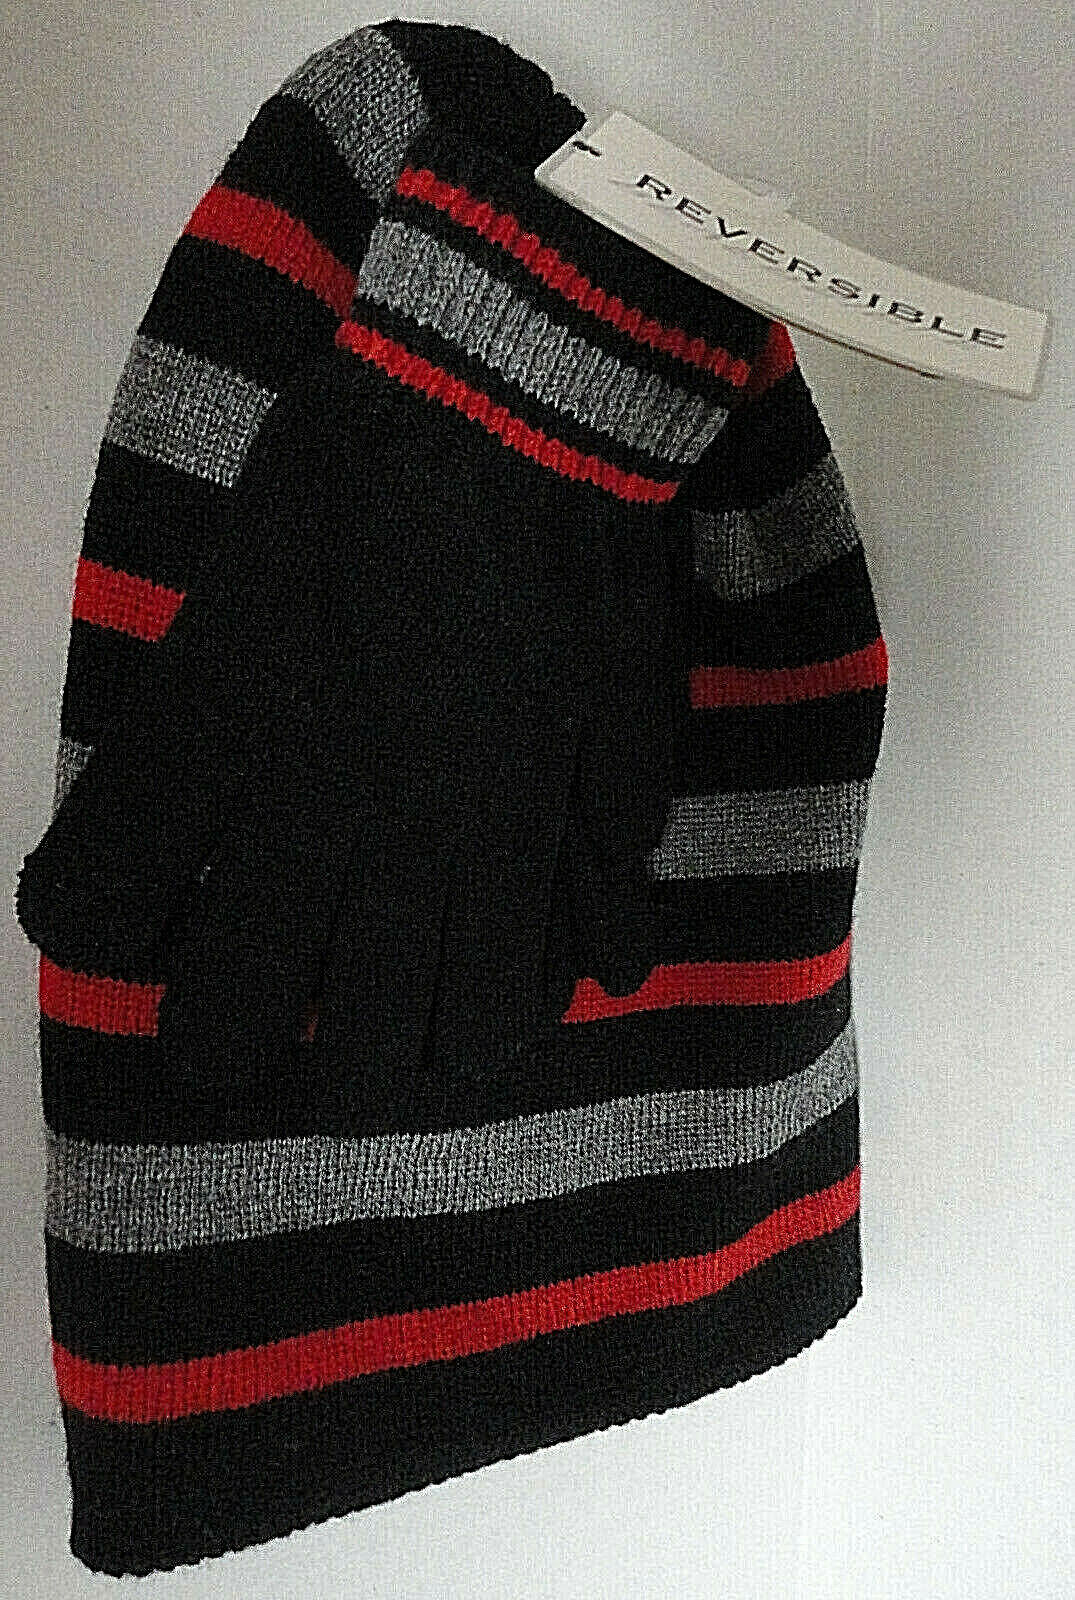 Boy's Winter Hat Beanie Gloves Set Black Red Gray Knit Acrylic Reversible Osfa